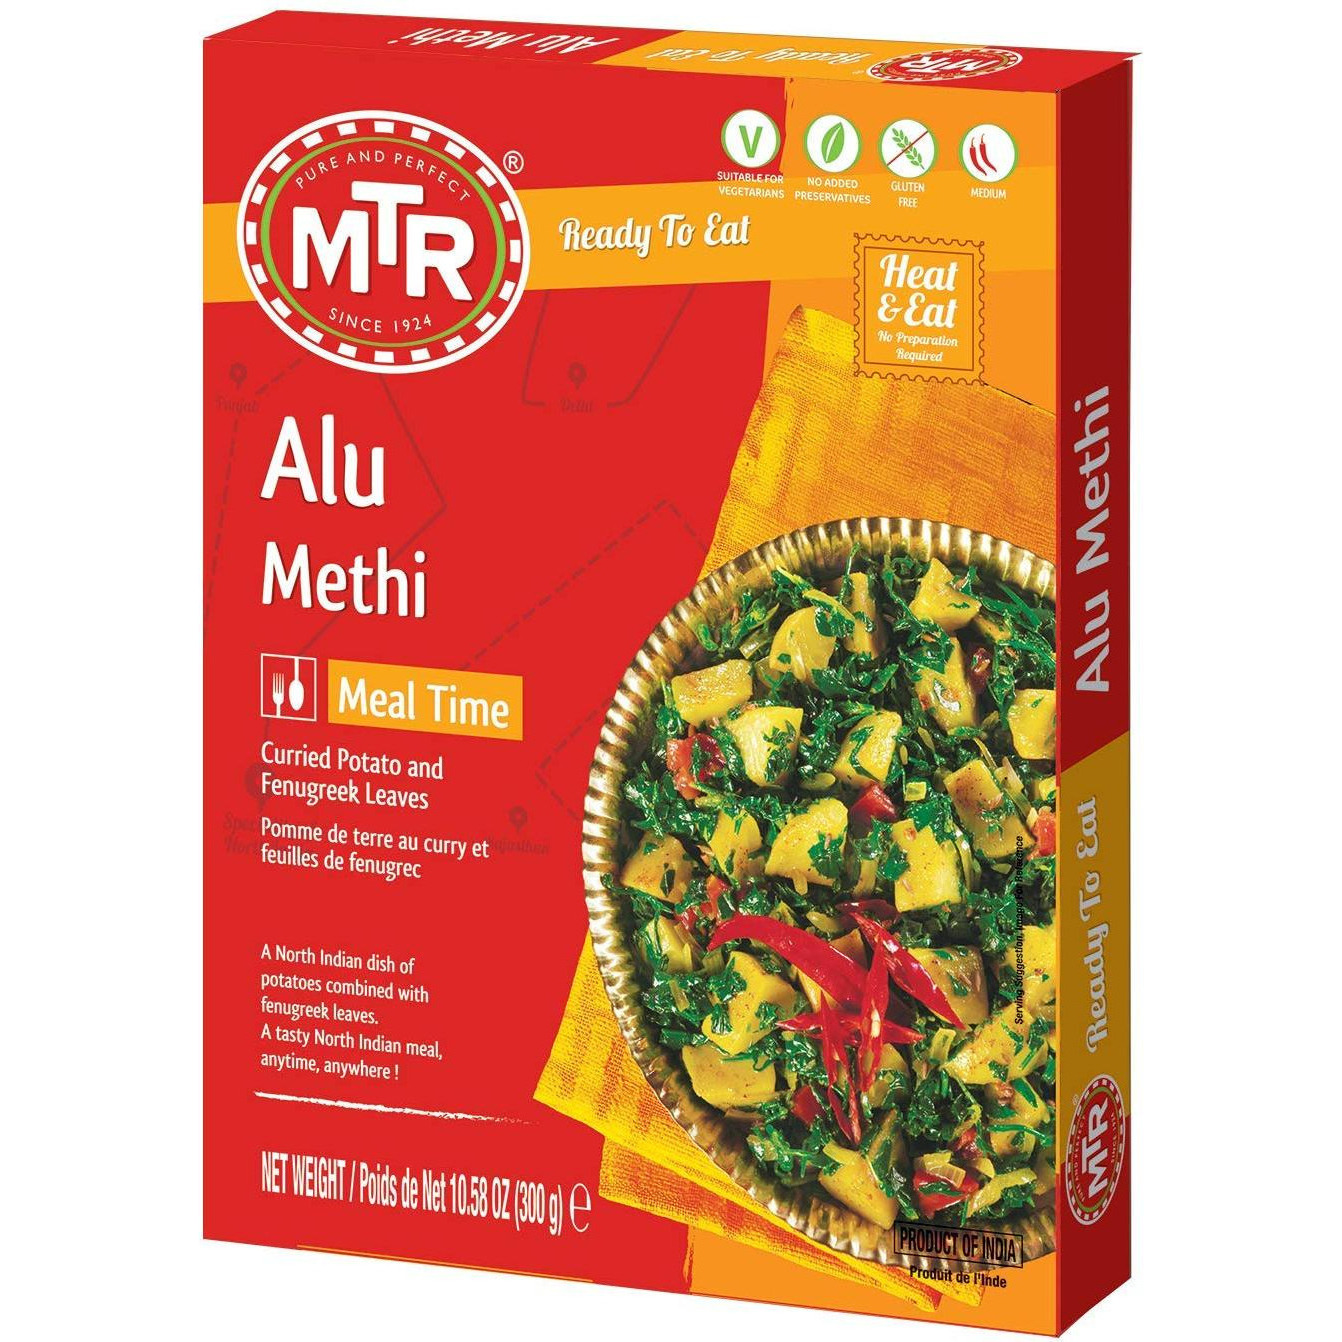 Pack of 4 - Mtr Ready To Eat Alu Methi - 300 Gm (10.5 Oz)